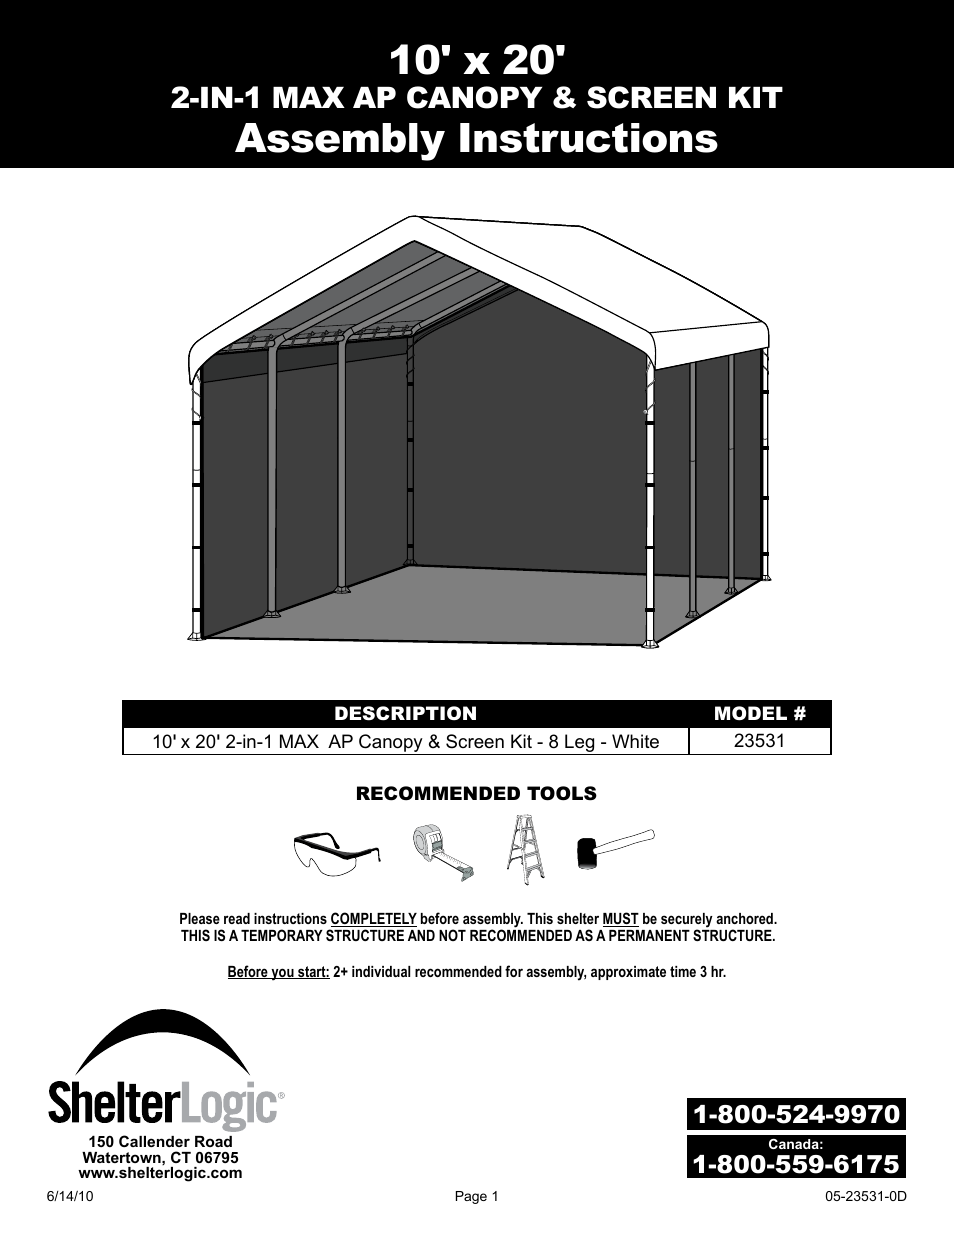 23531 10 x 20 Max AP Canopy 2-in-1 Pack - Screen Kit